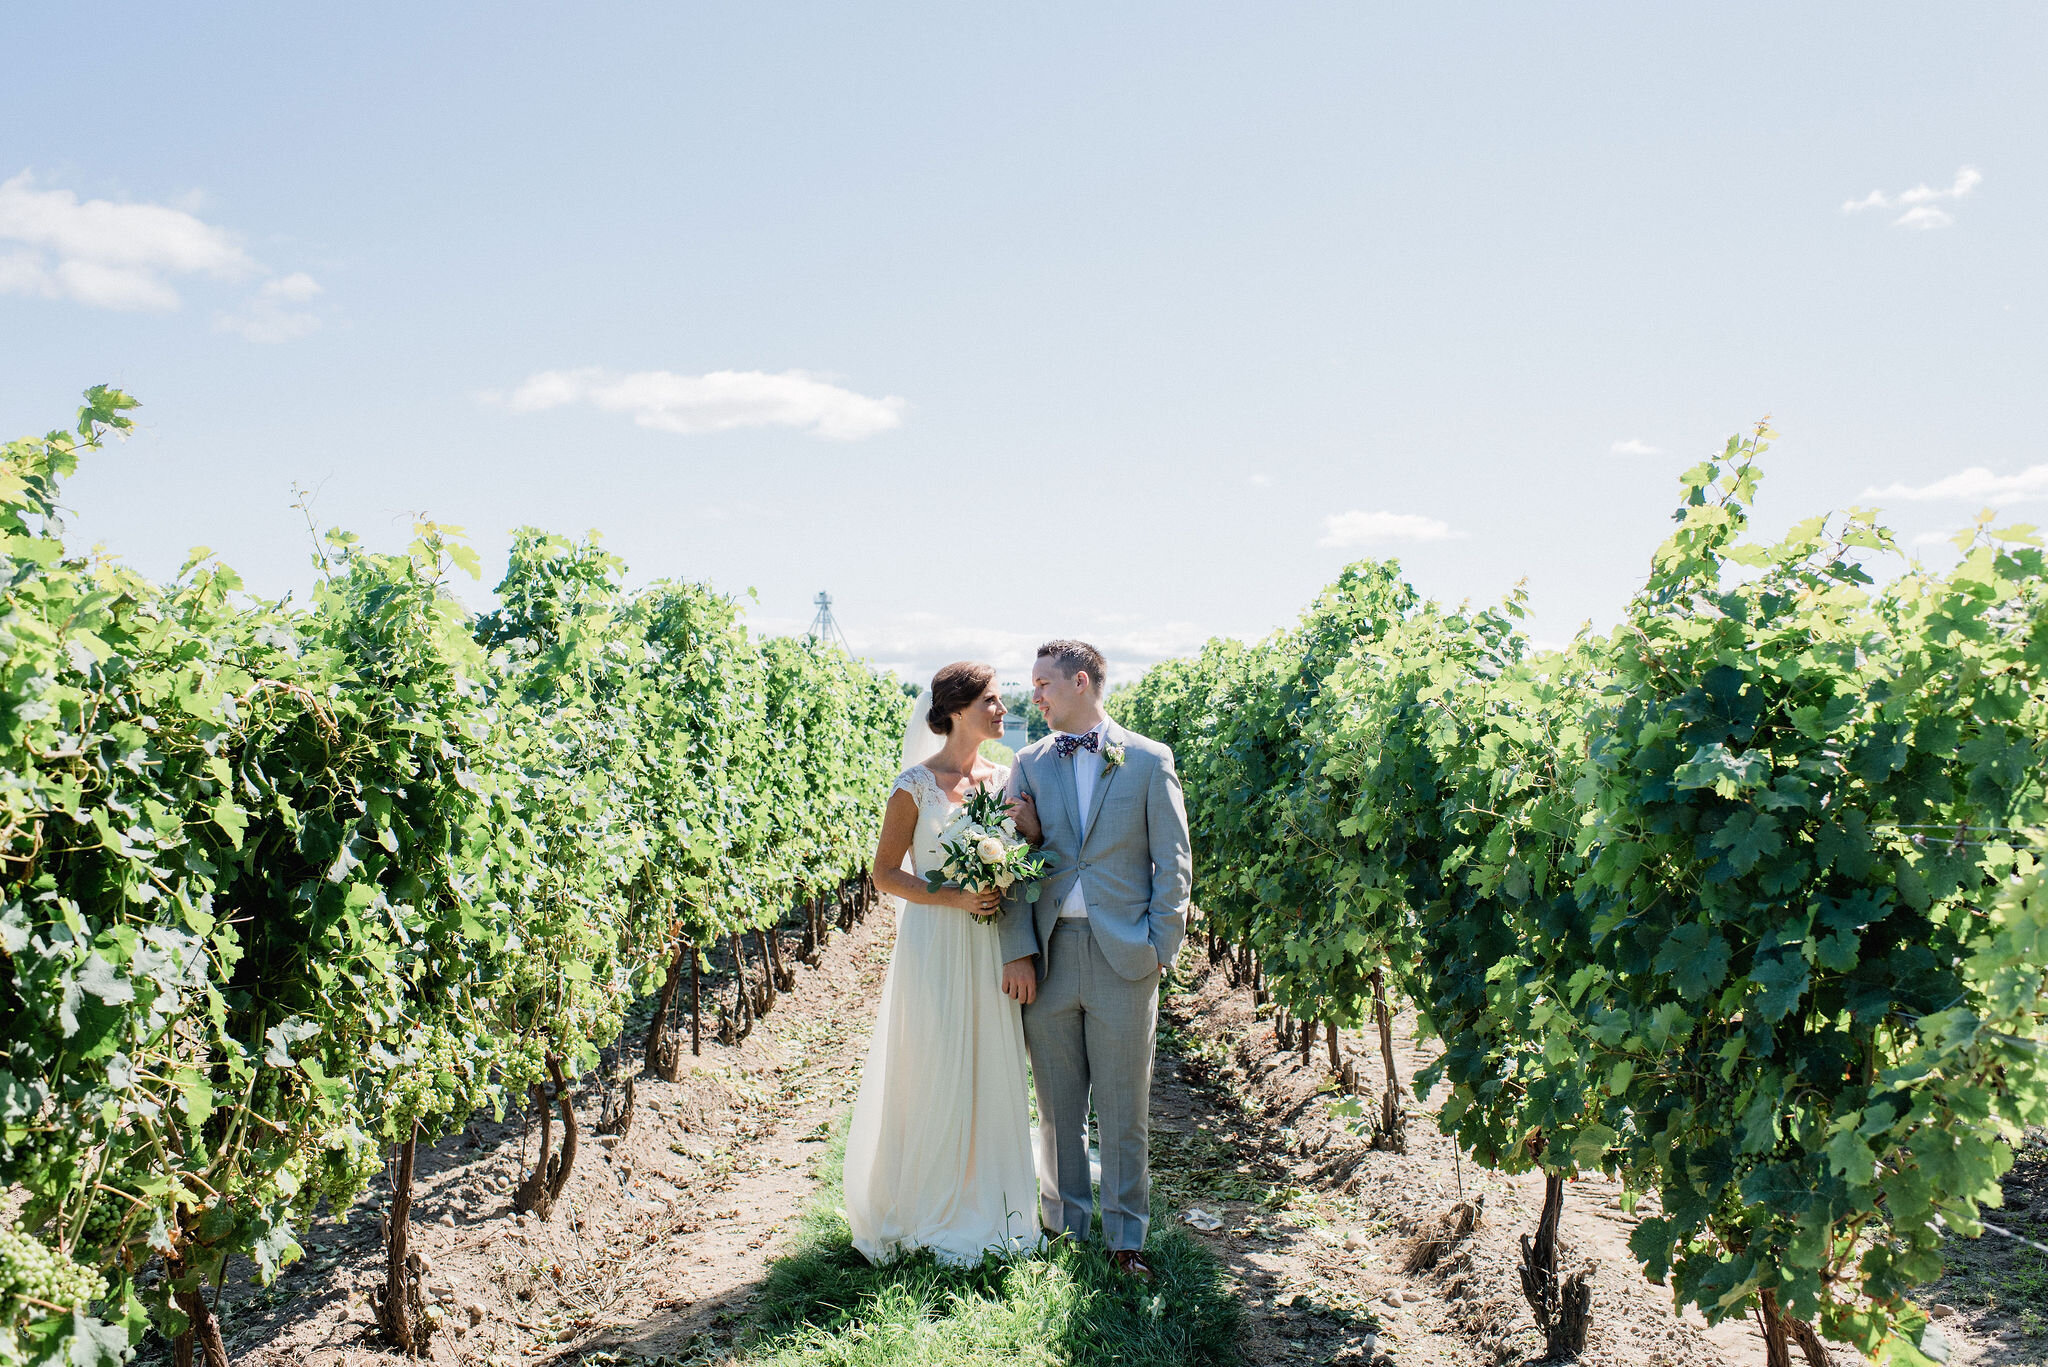 Honsberger-Estate-Wedding-Summer-Winery-Vineyard-Bride-Niagara-on-the-Lake-photos-by-Jacqueline-James-Photography-0043.JPG